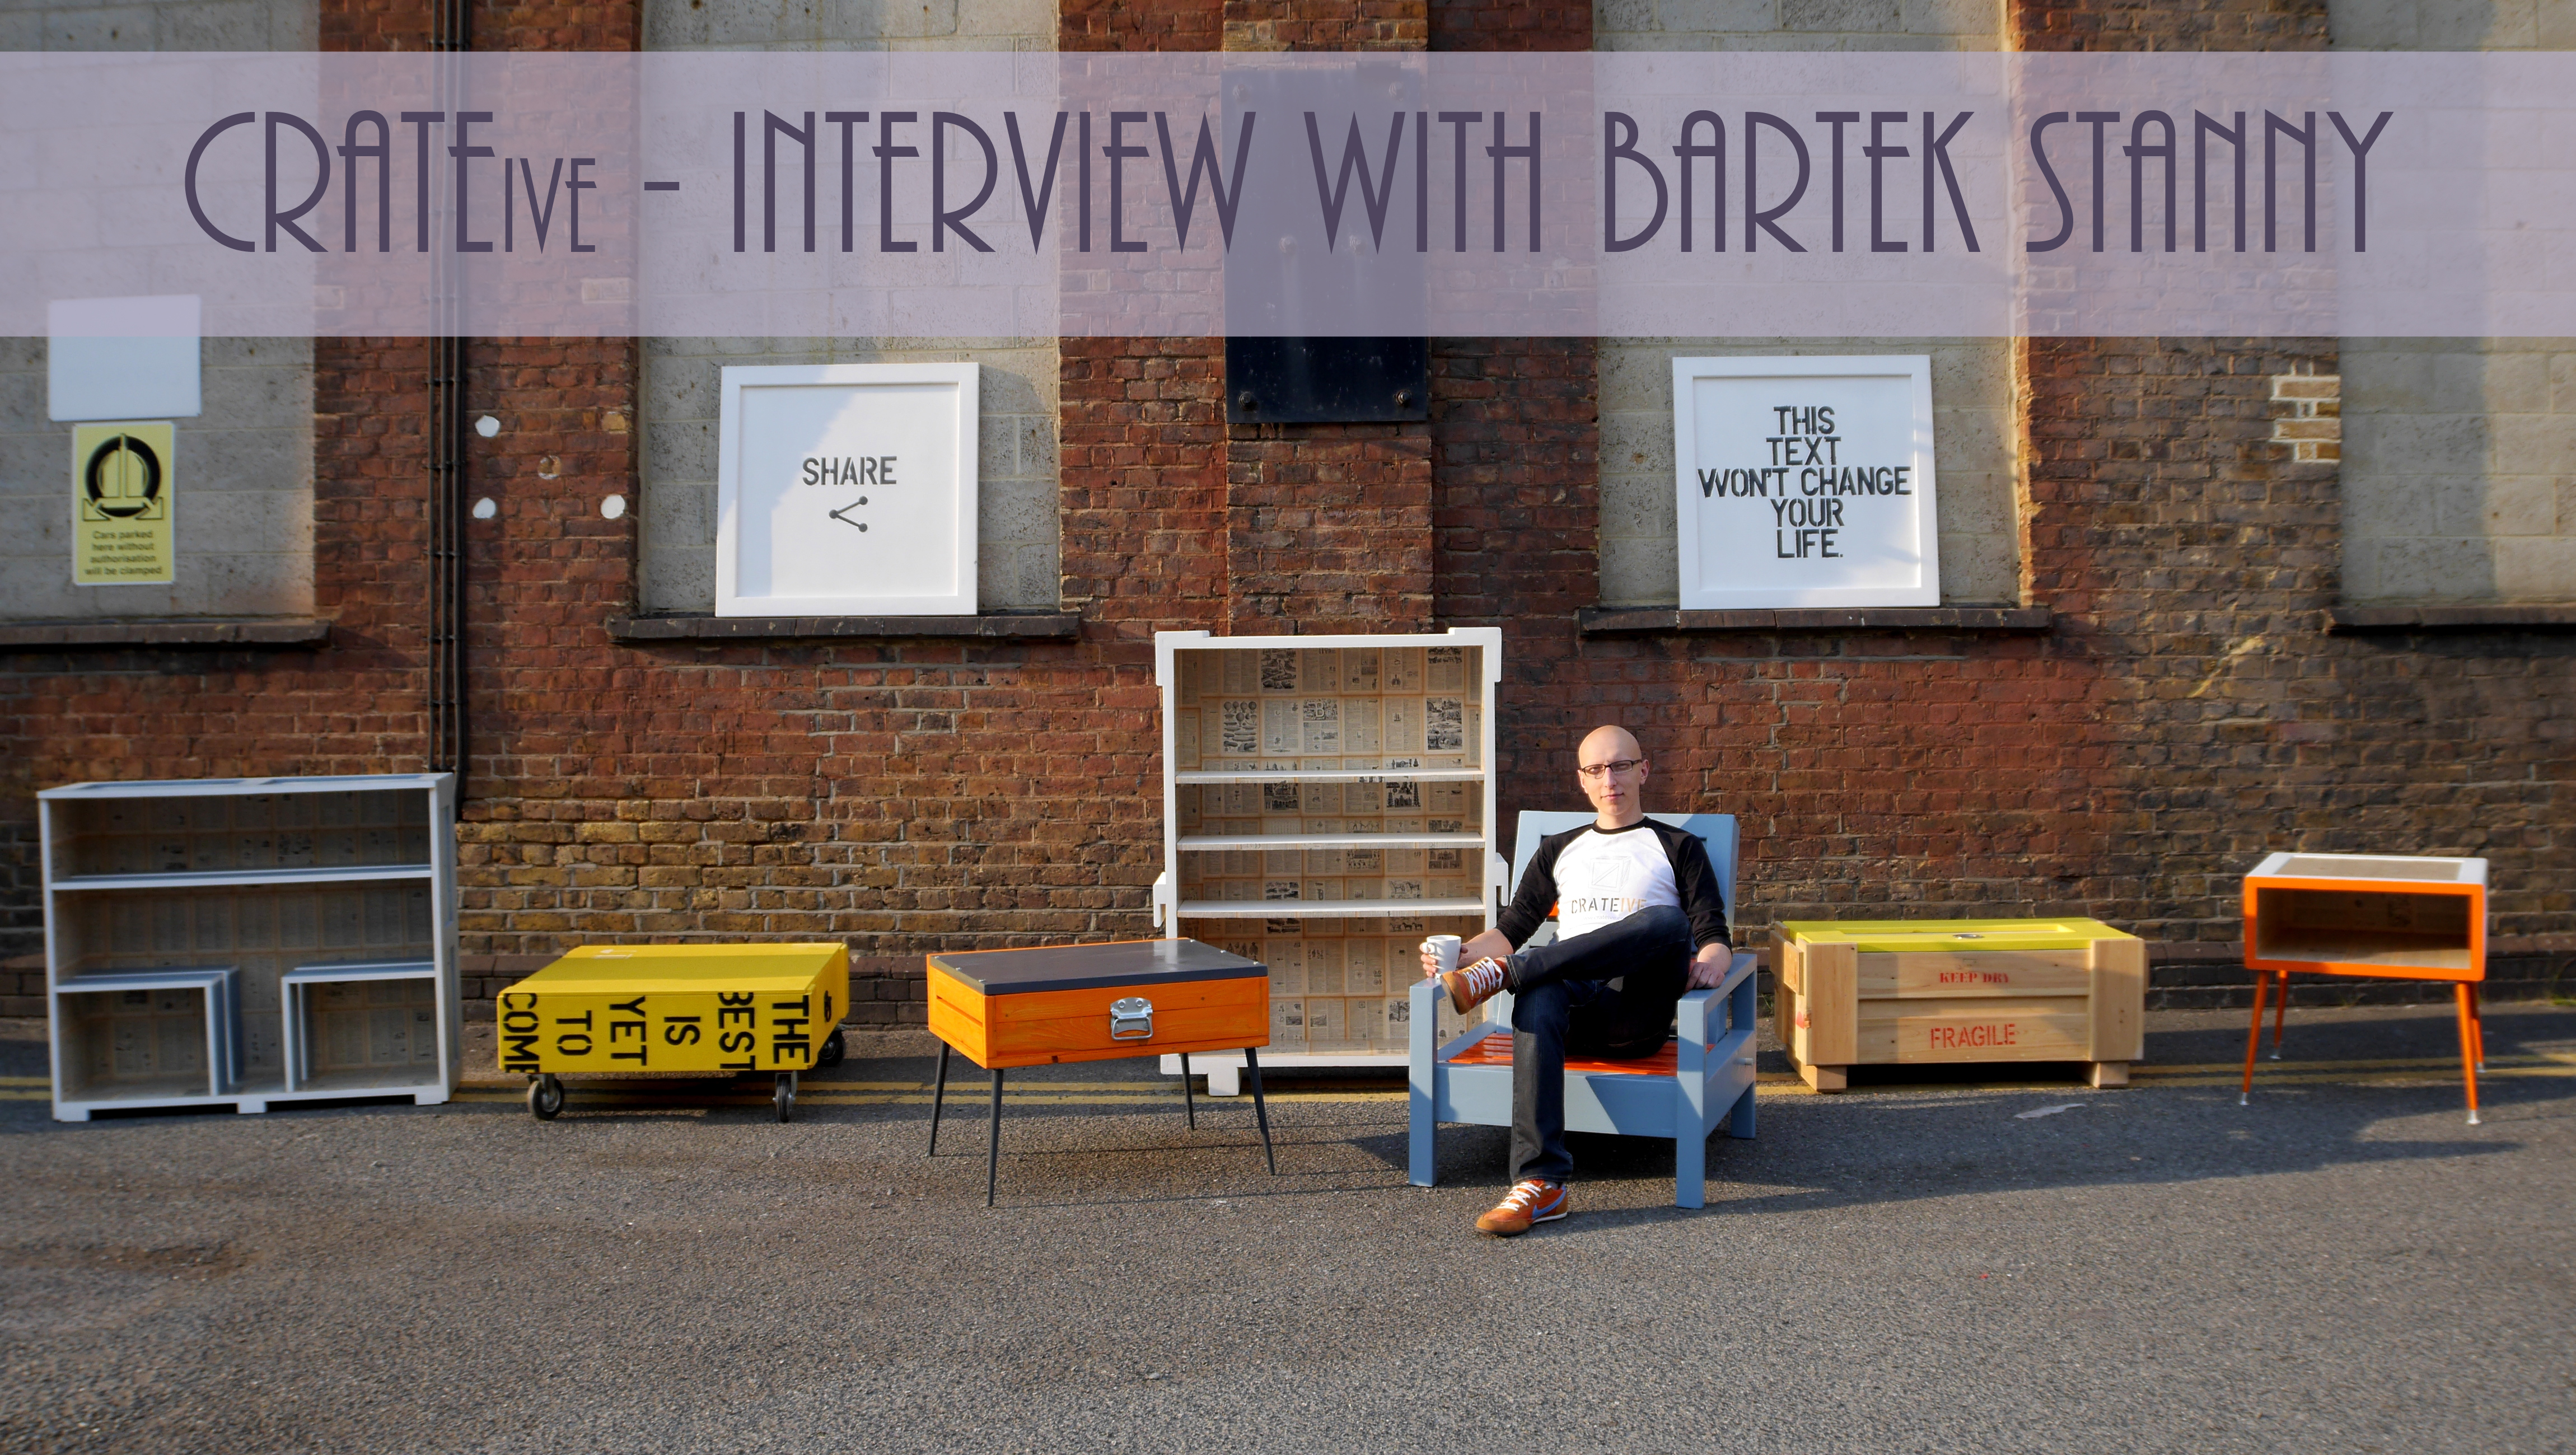 CRATEive - Interview with Bartek Stanny